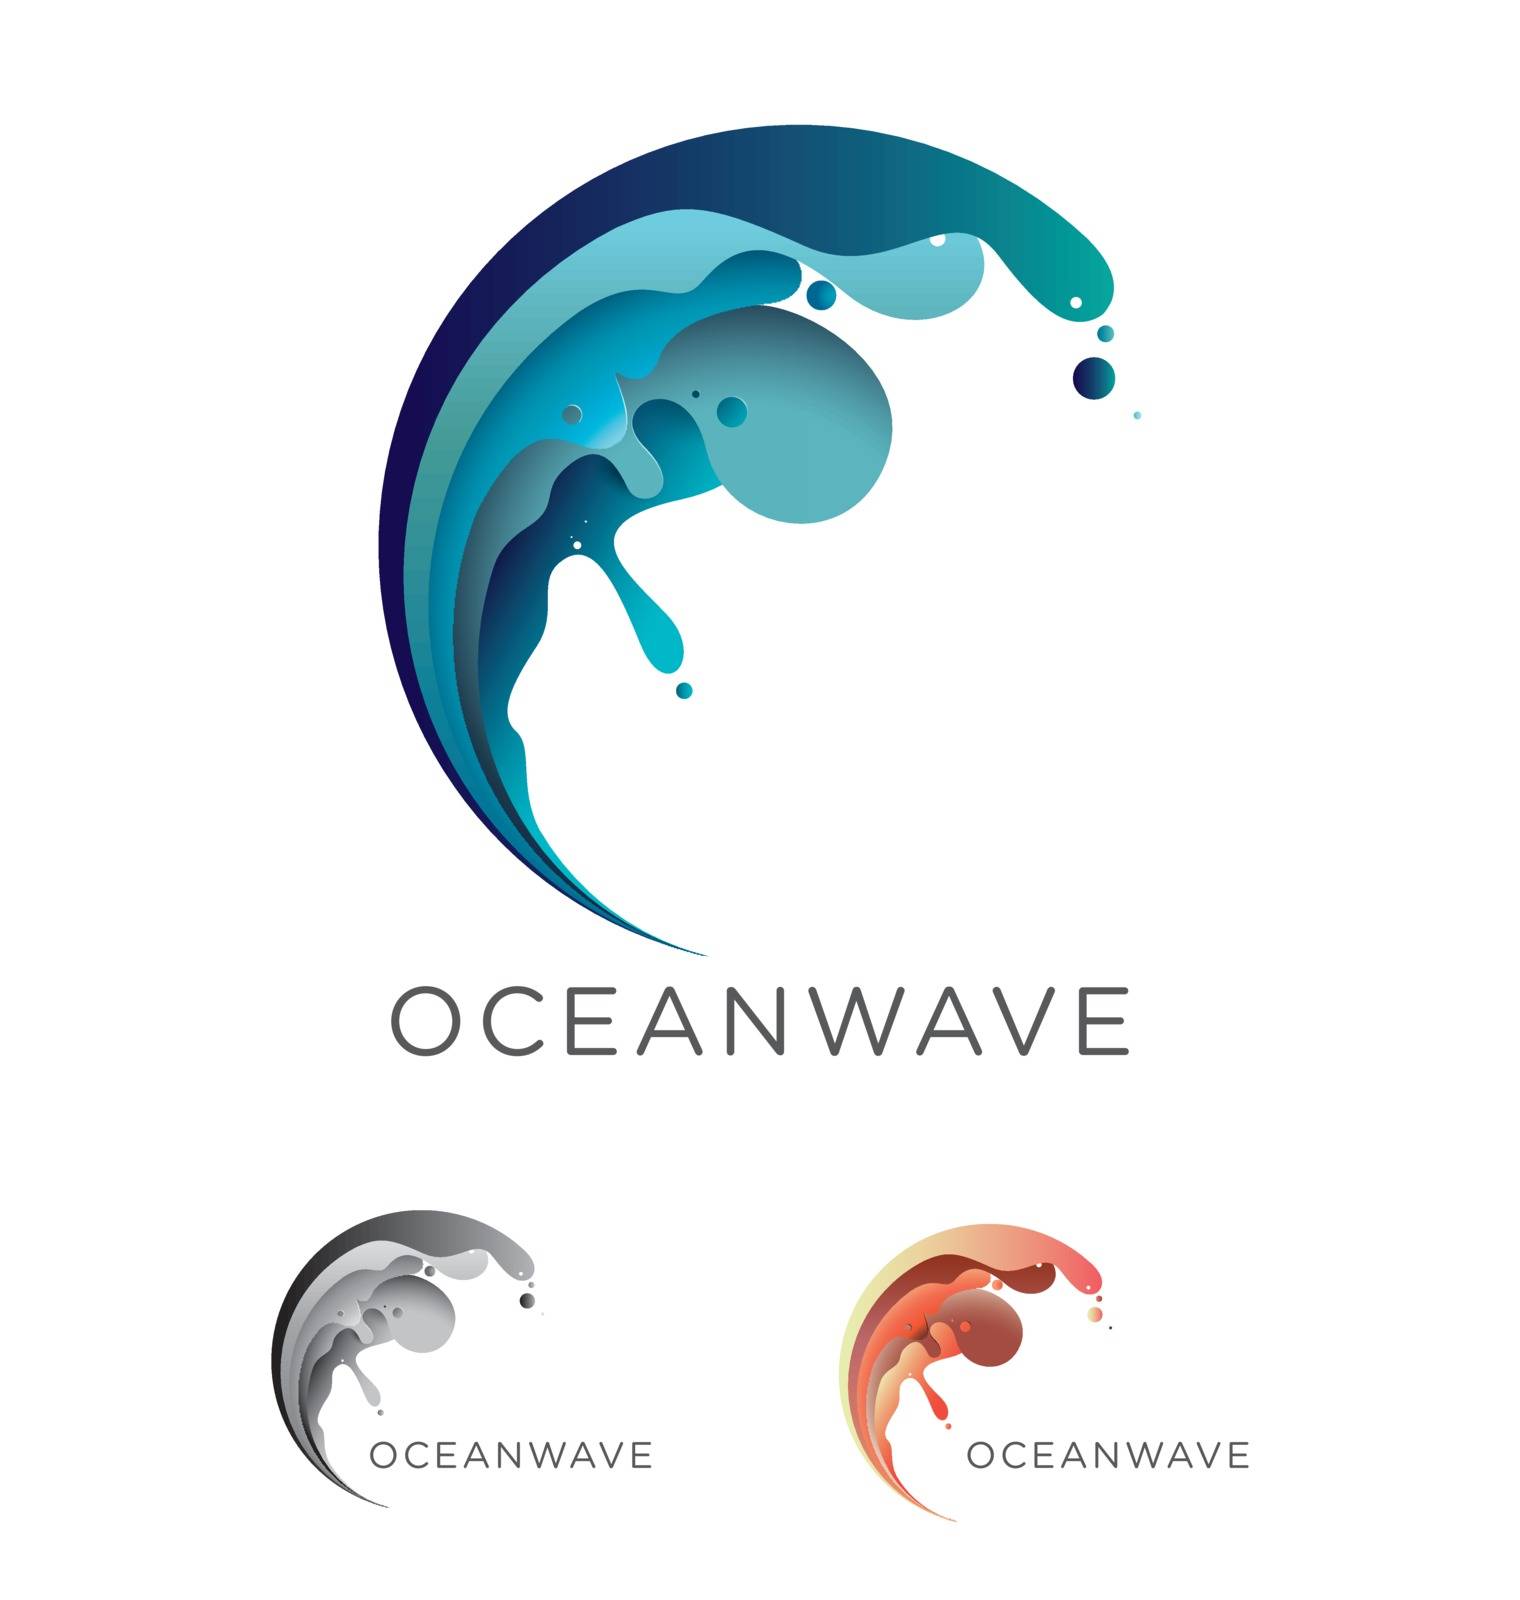 Ocean wave by HypnoCreative